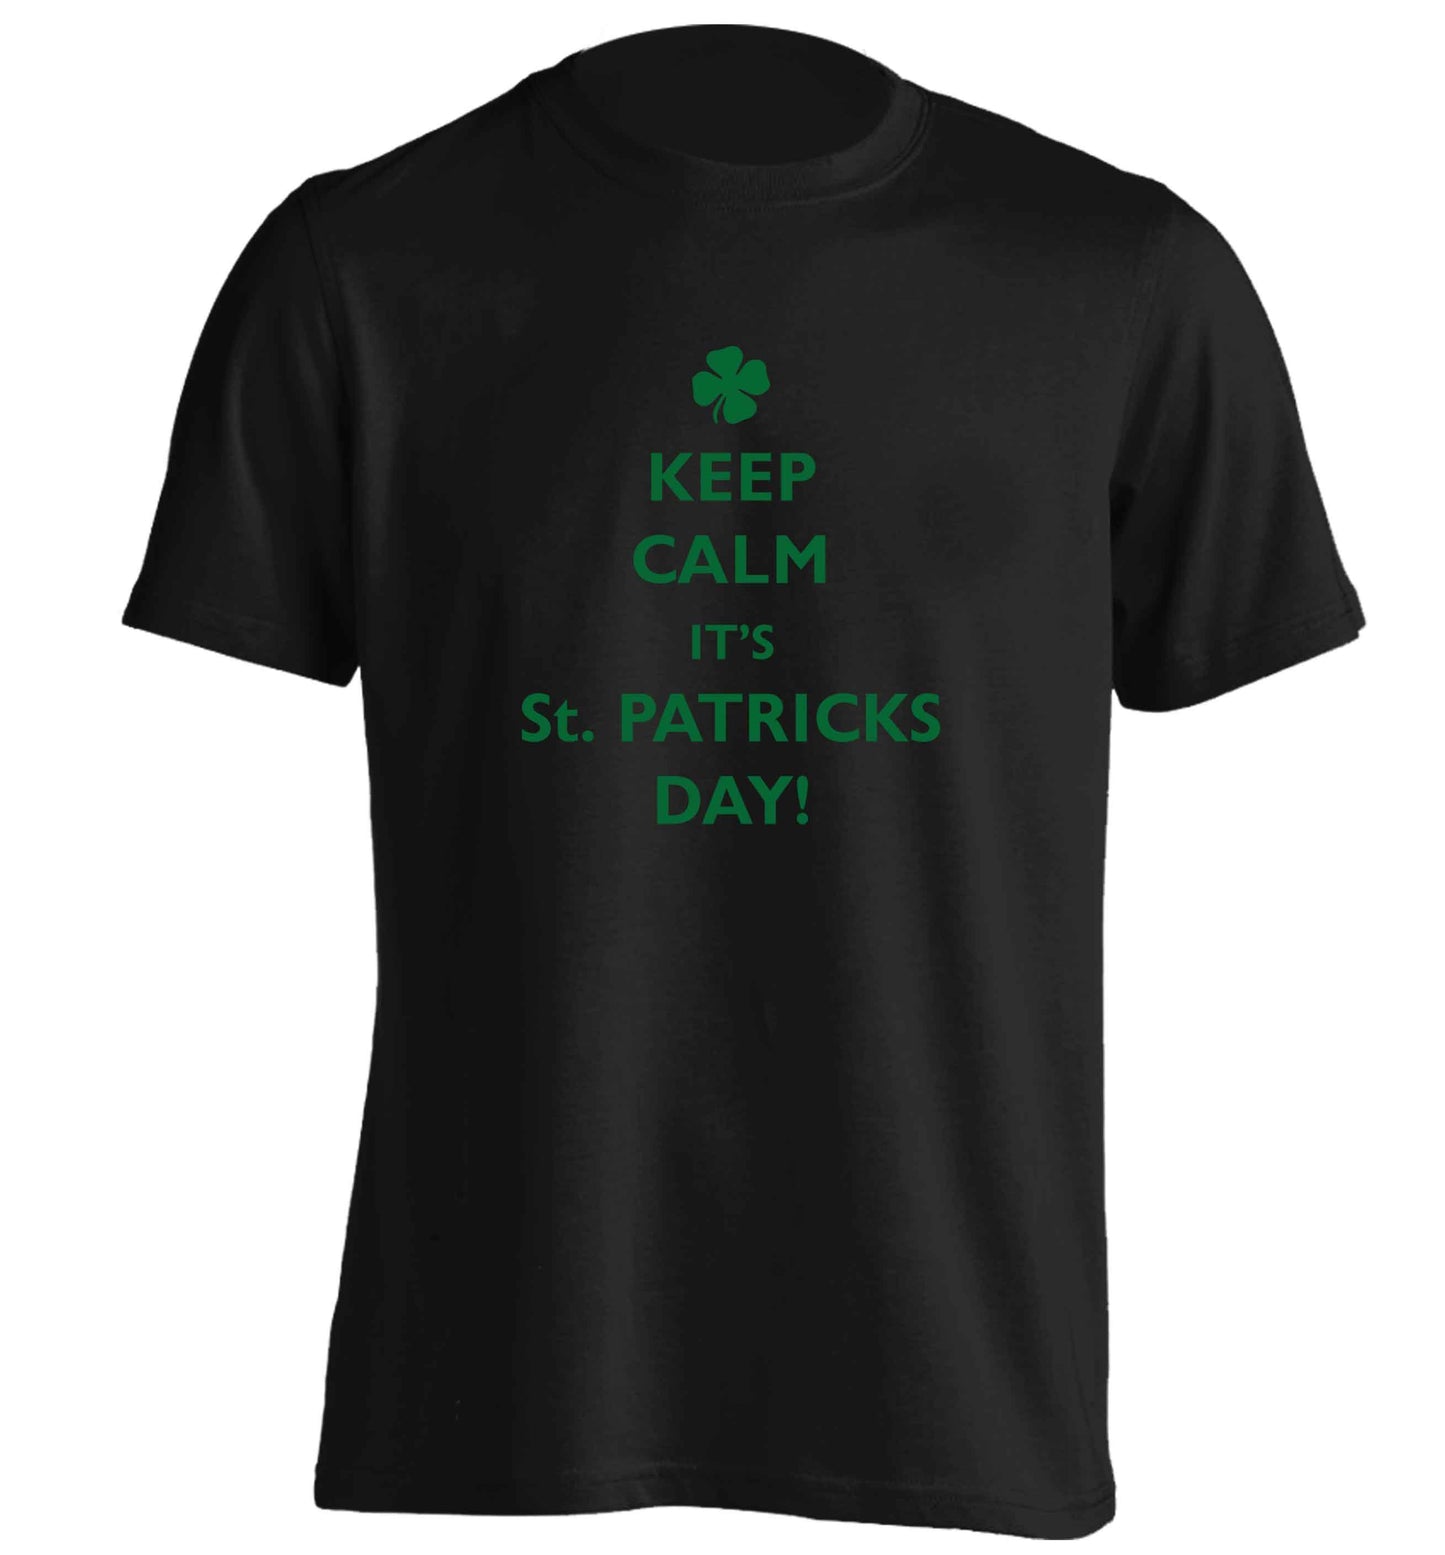 Keep calm it's St.Patricks day adults unisex black Tshirt 2XL